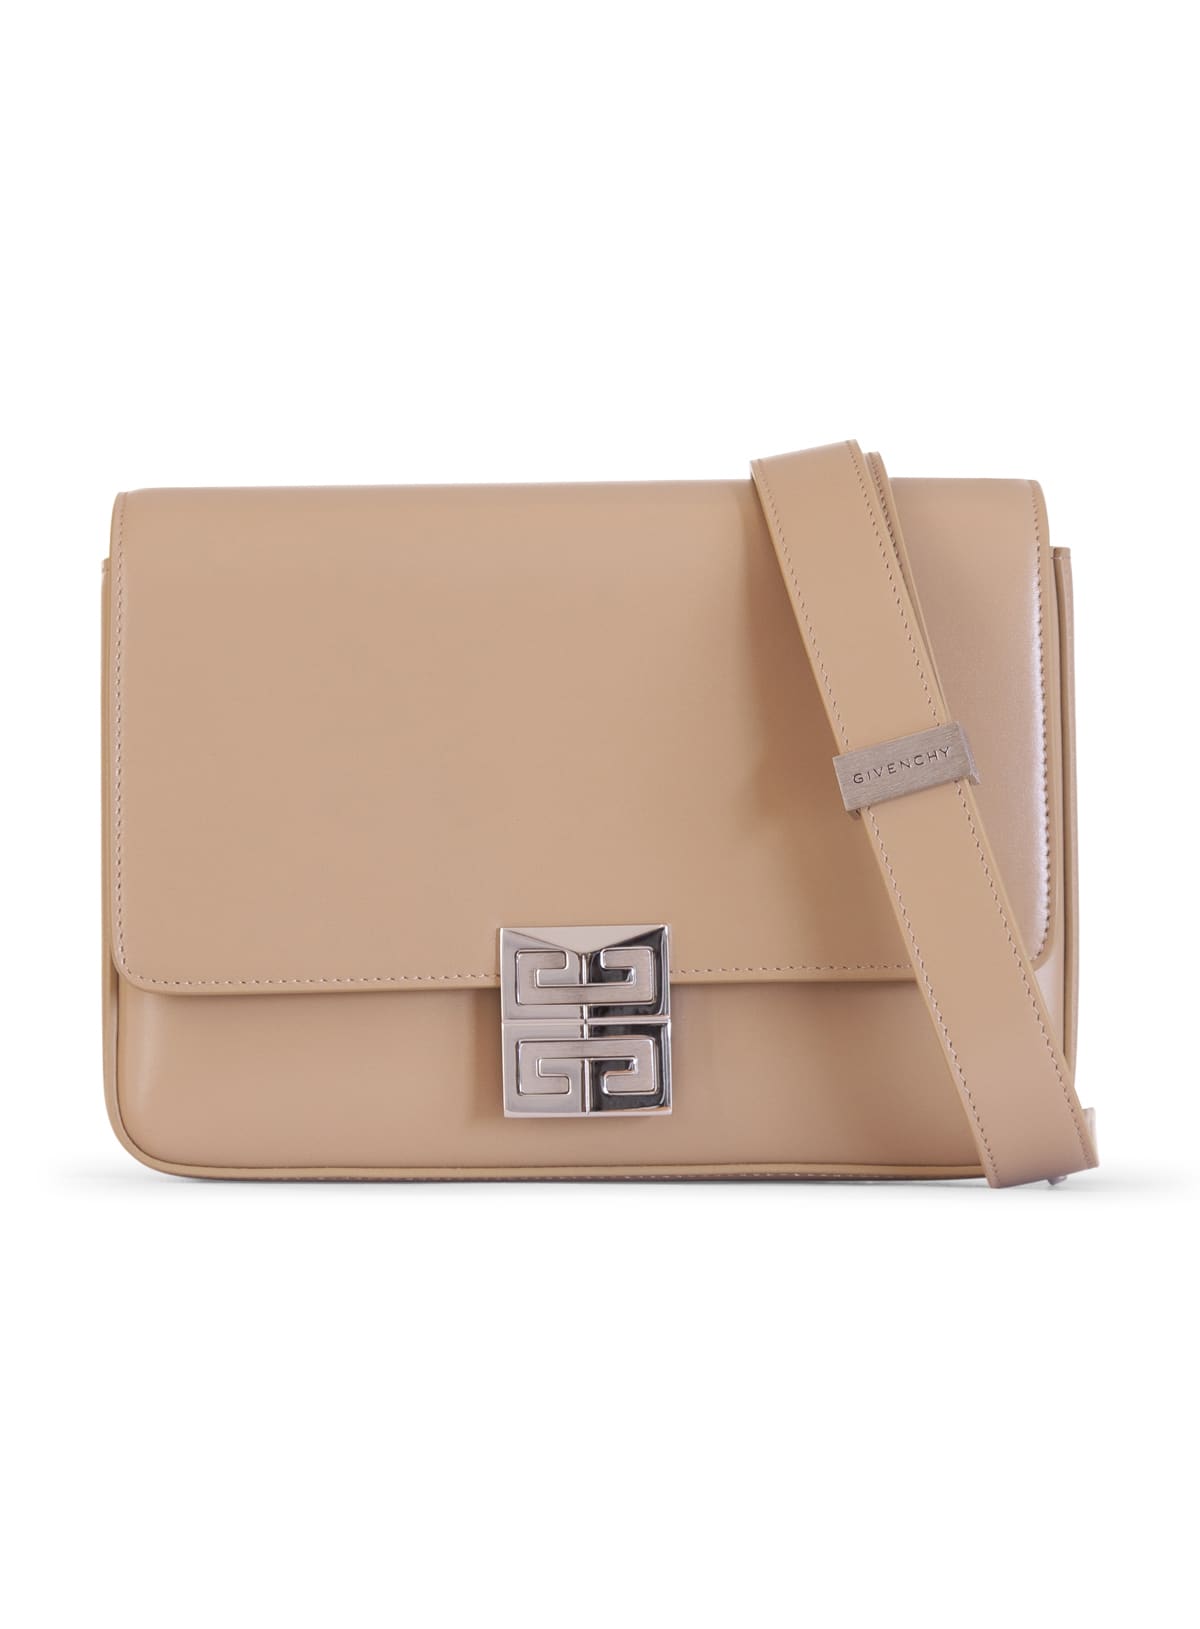 Givenchy 4g Medium Leather Bag